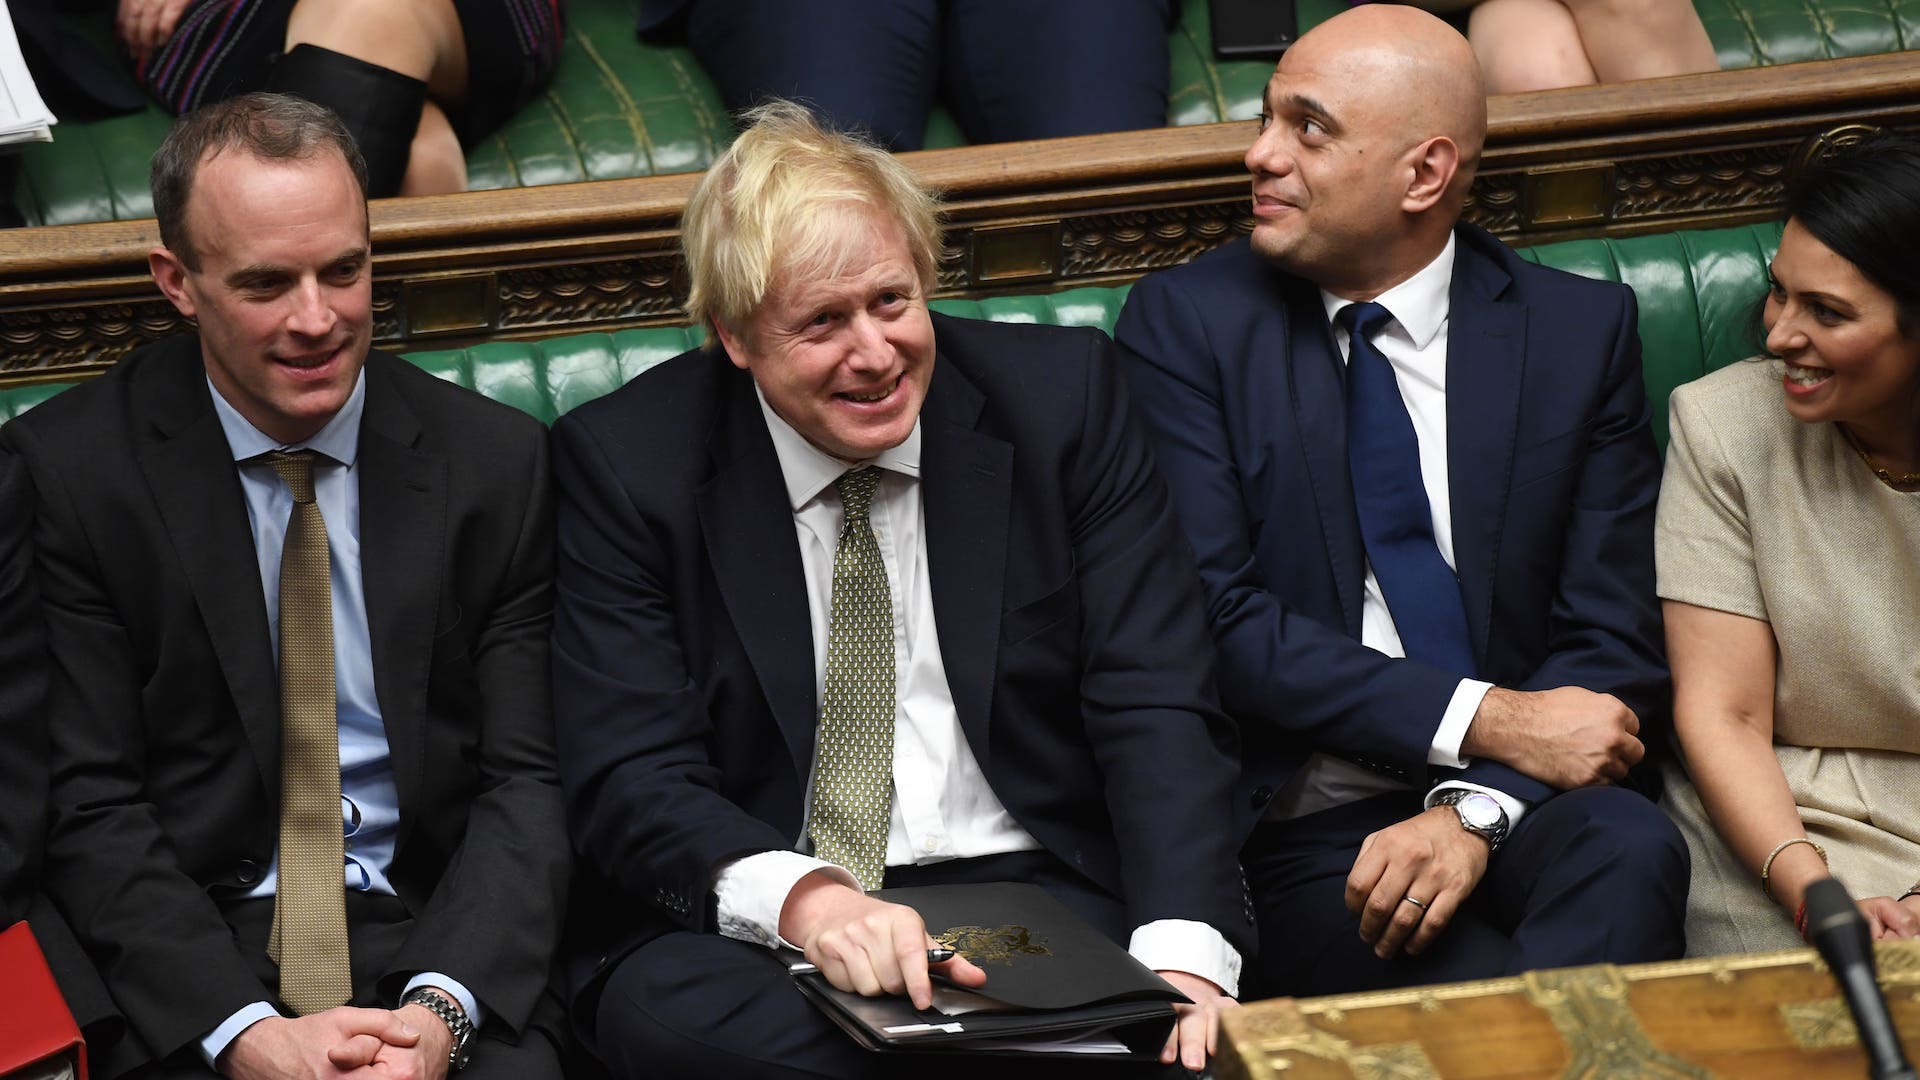 Boris Johnson is accused of lying in parliament